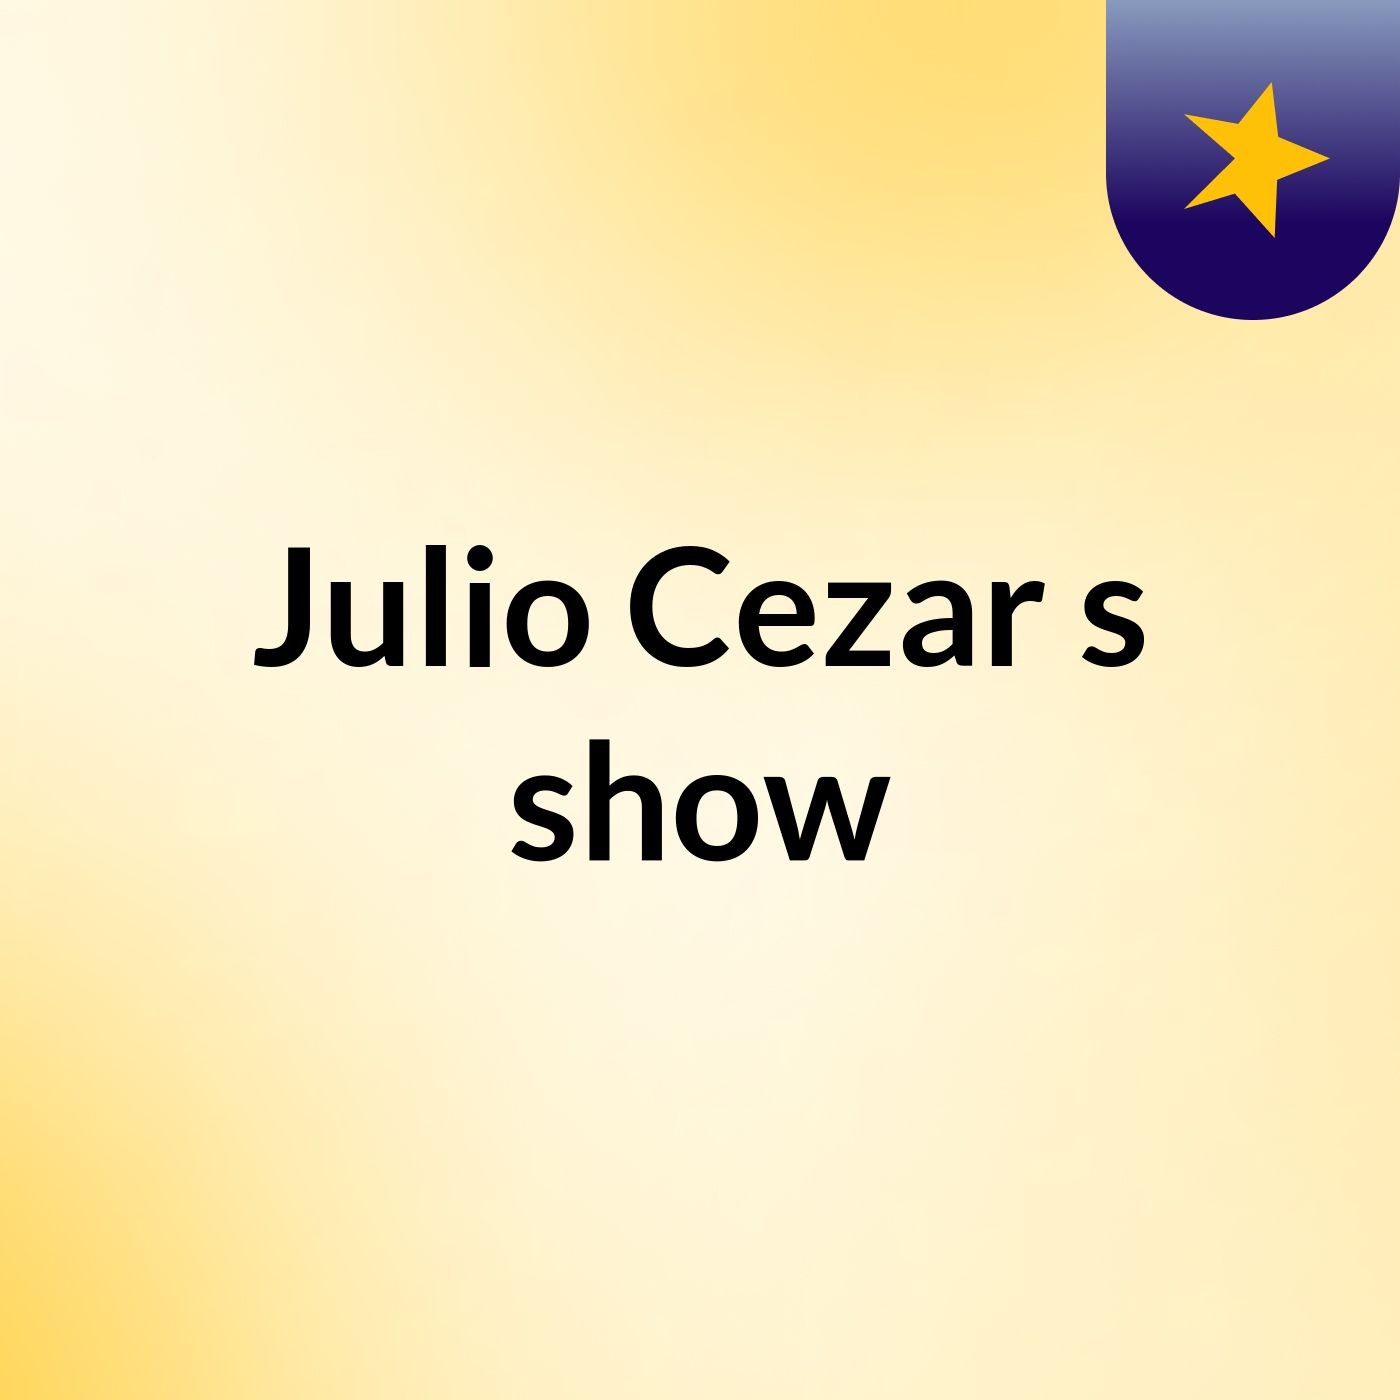 Julio Cezar's show